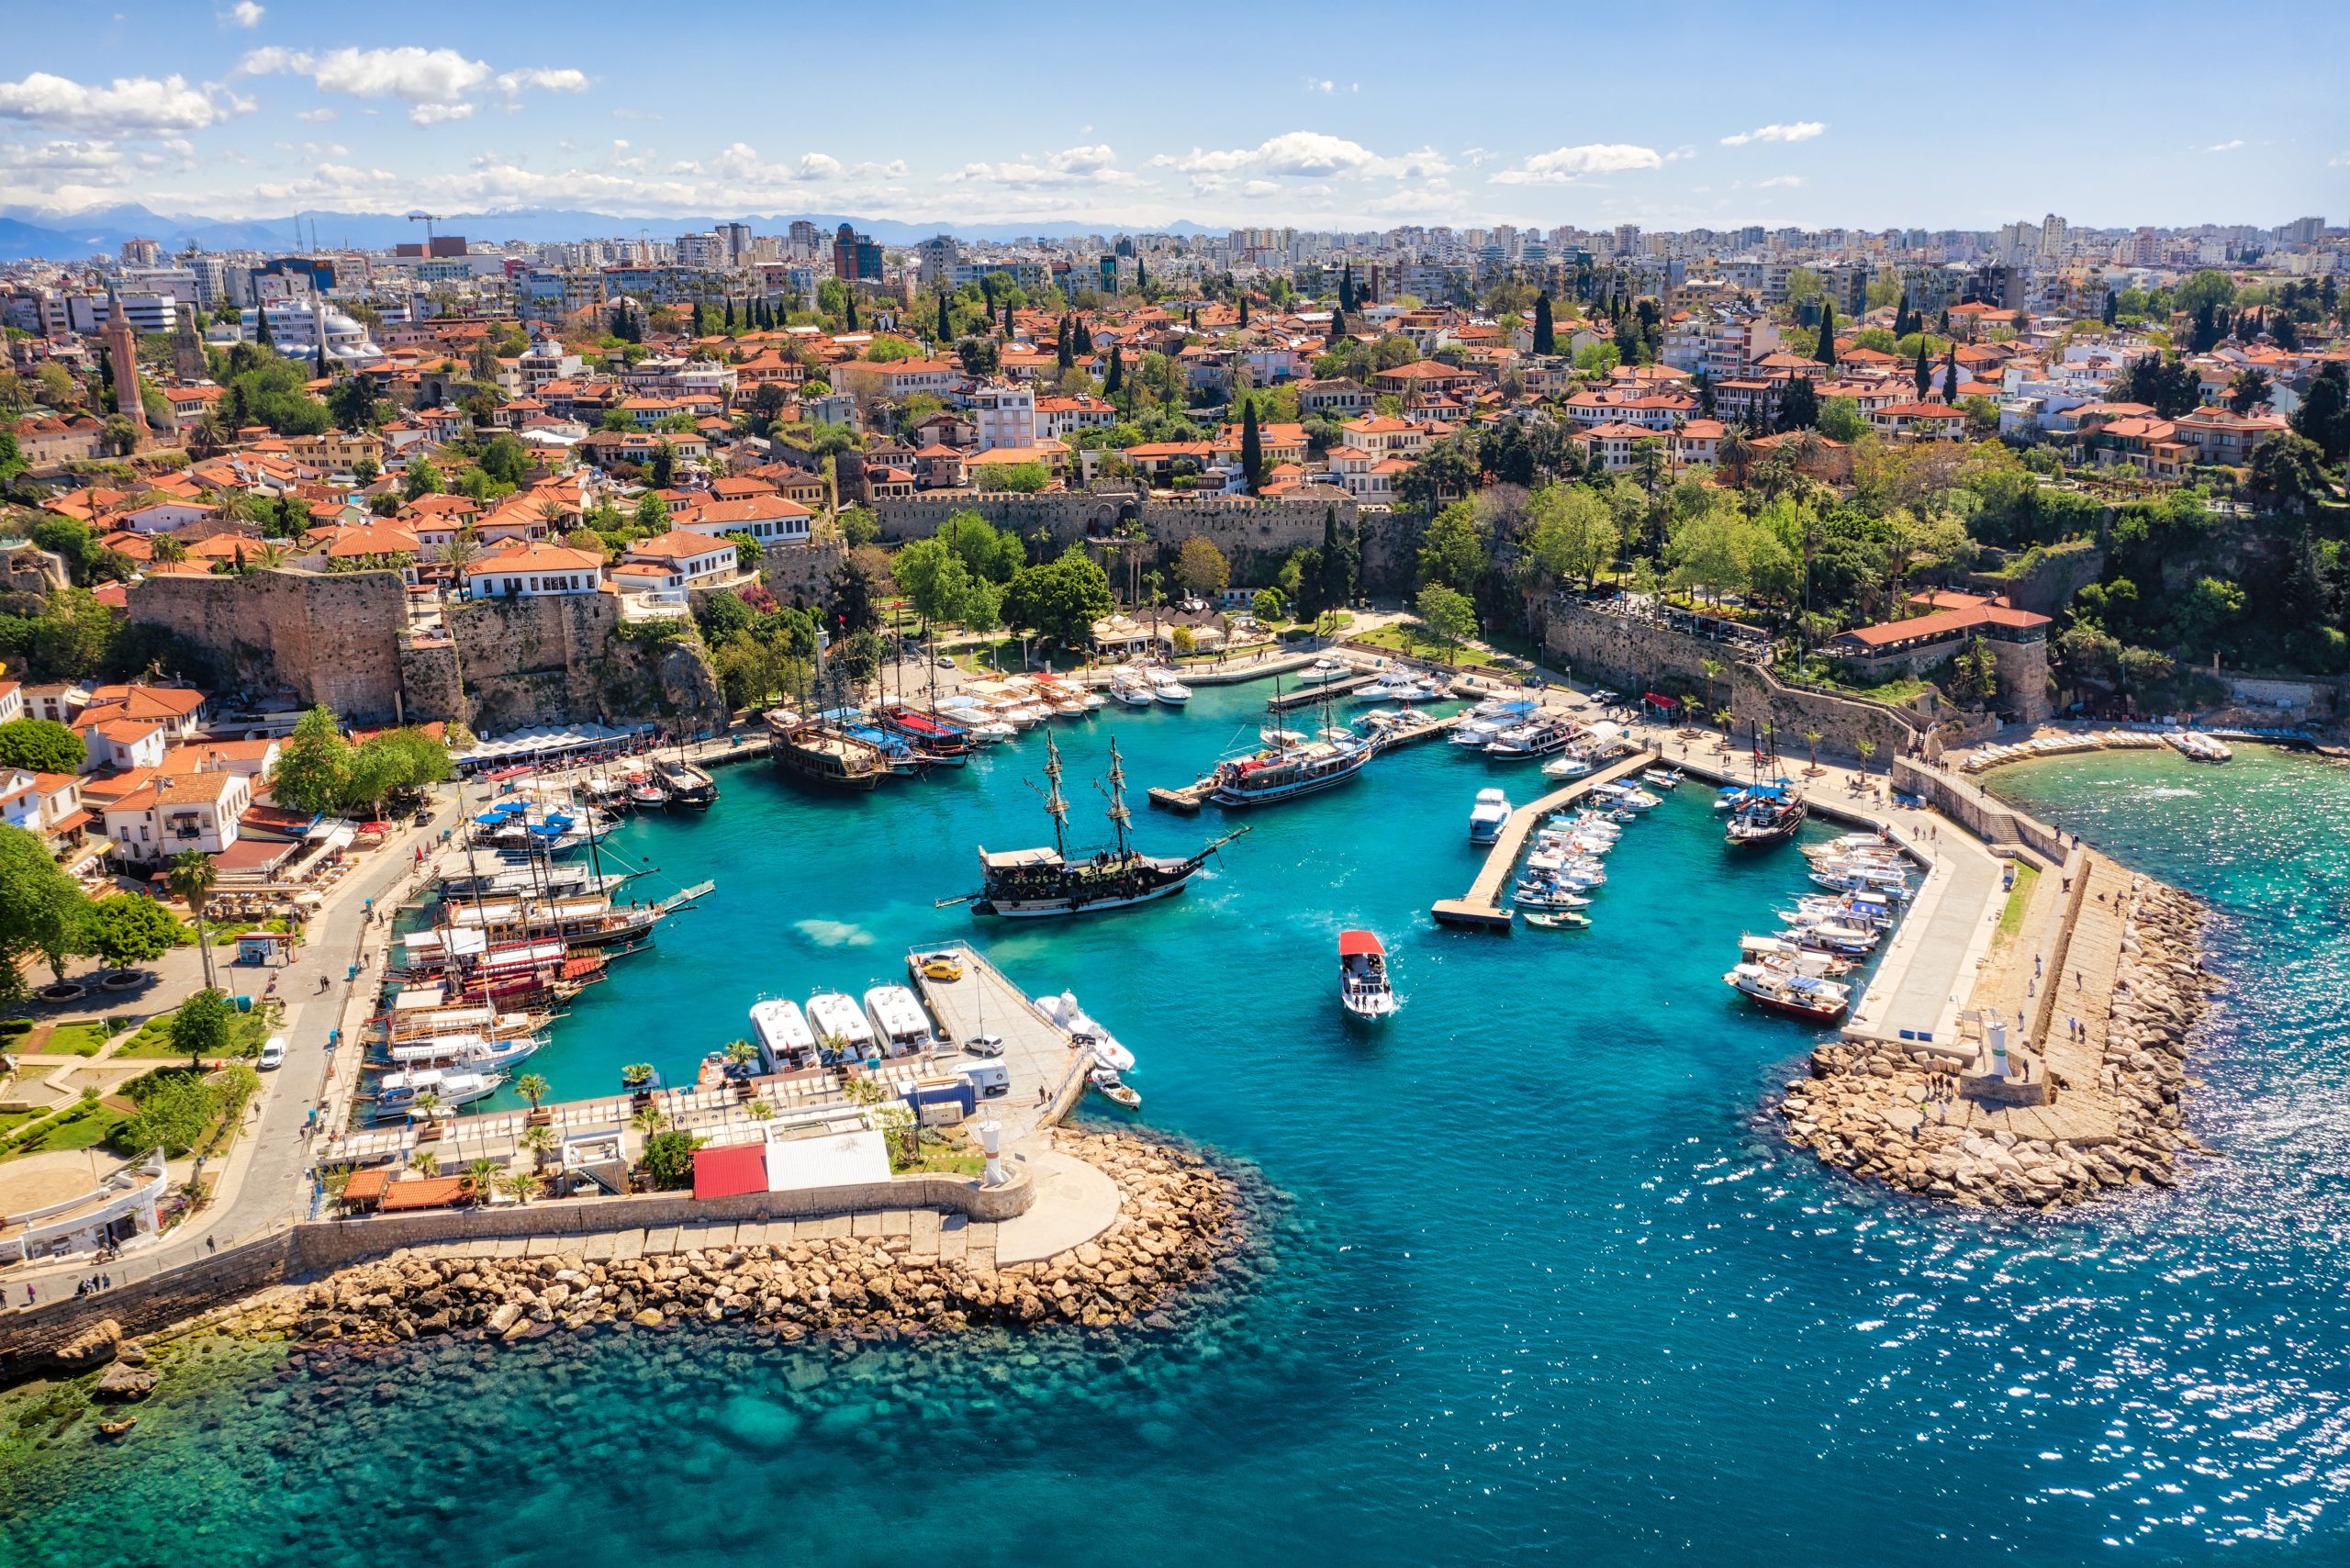 Antalya Harbor, Turkey, taken in April 2019rn' taken in hdr